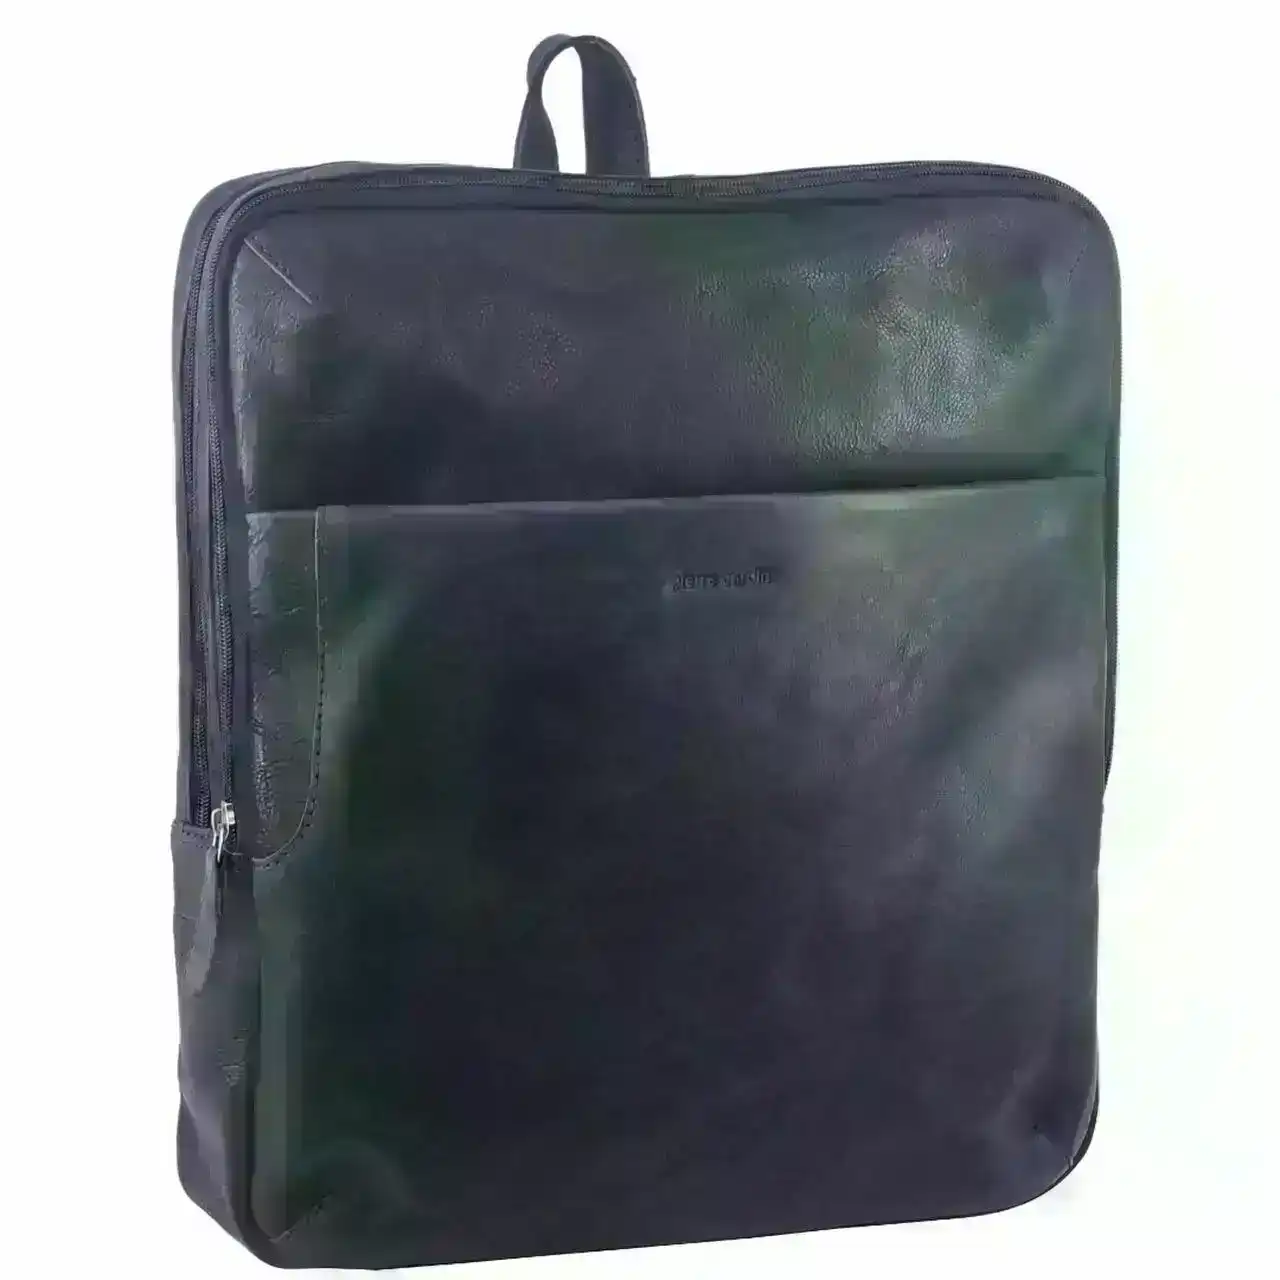 Pierre Cardin Rustic Large Leather Backpack Bag Rucksack Men Women - Midnight